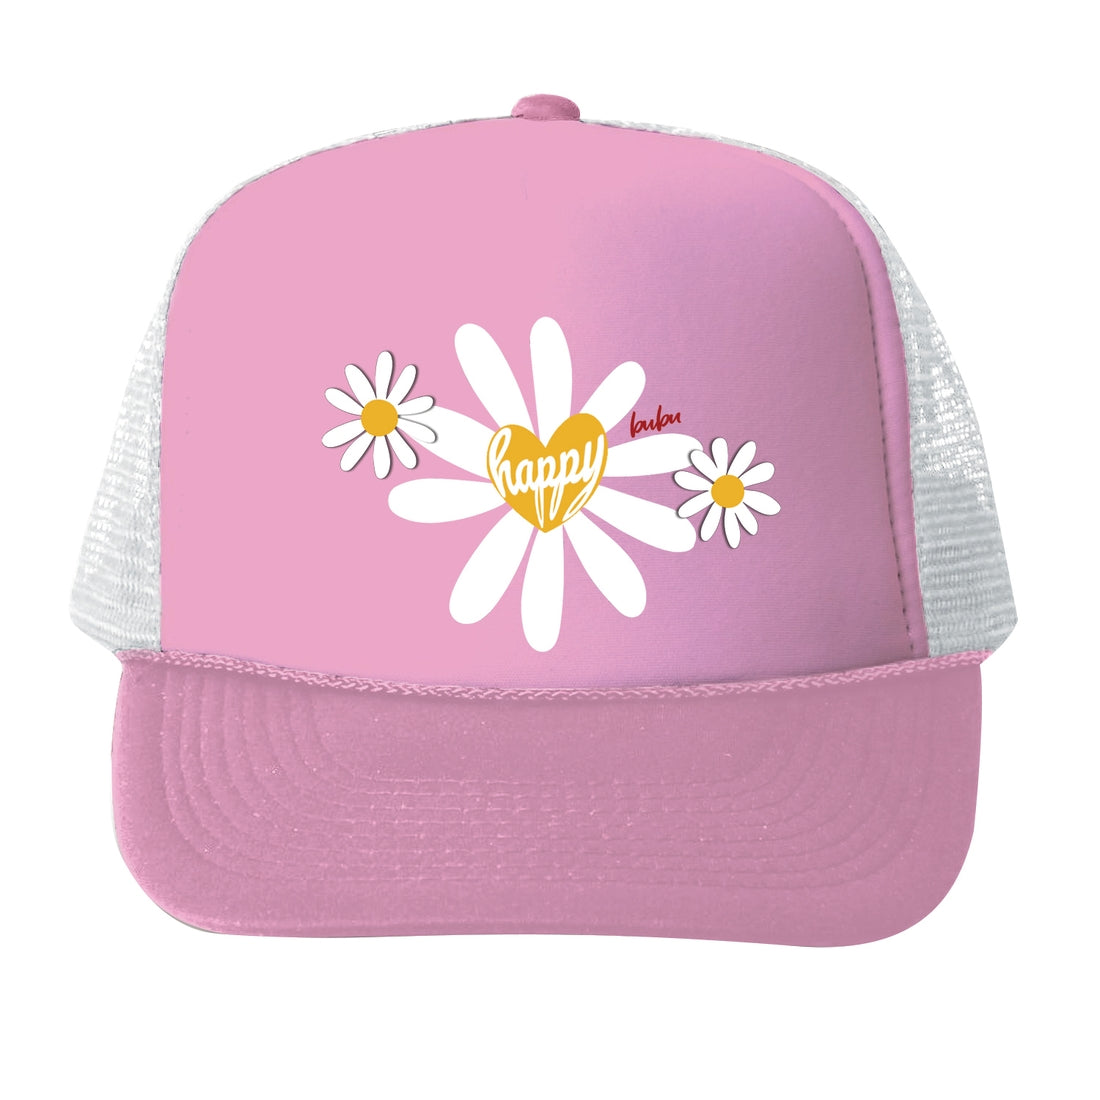 Bubu happy daisy trucker hat